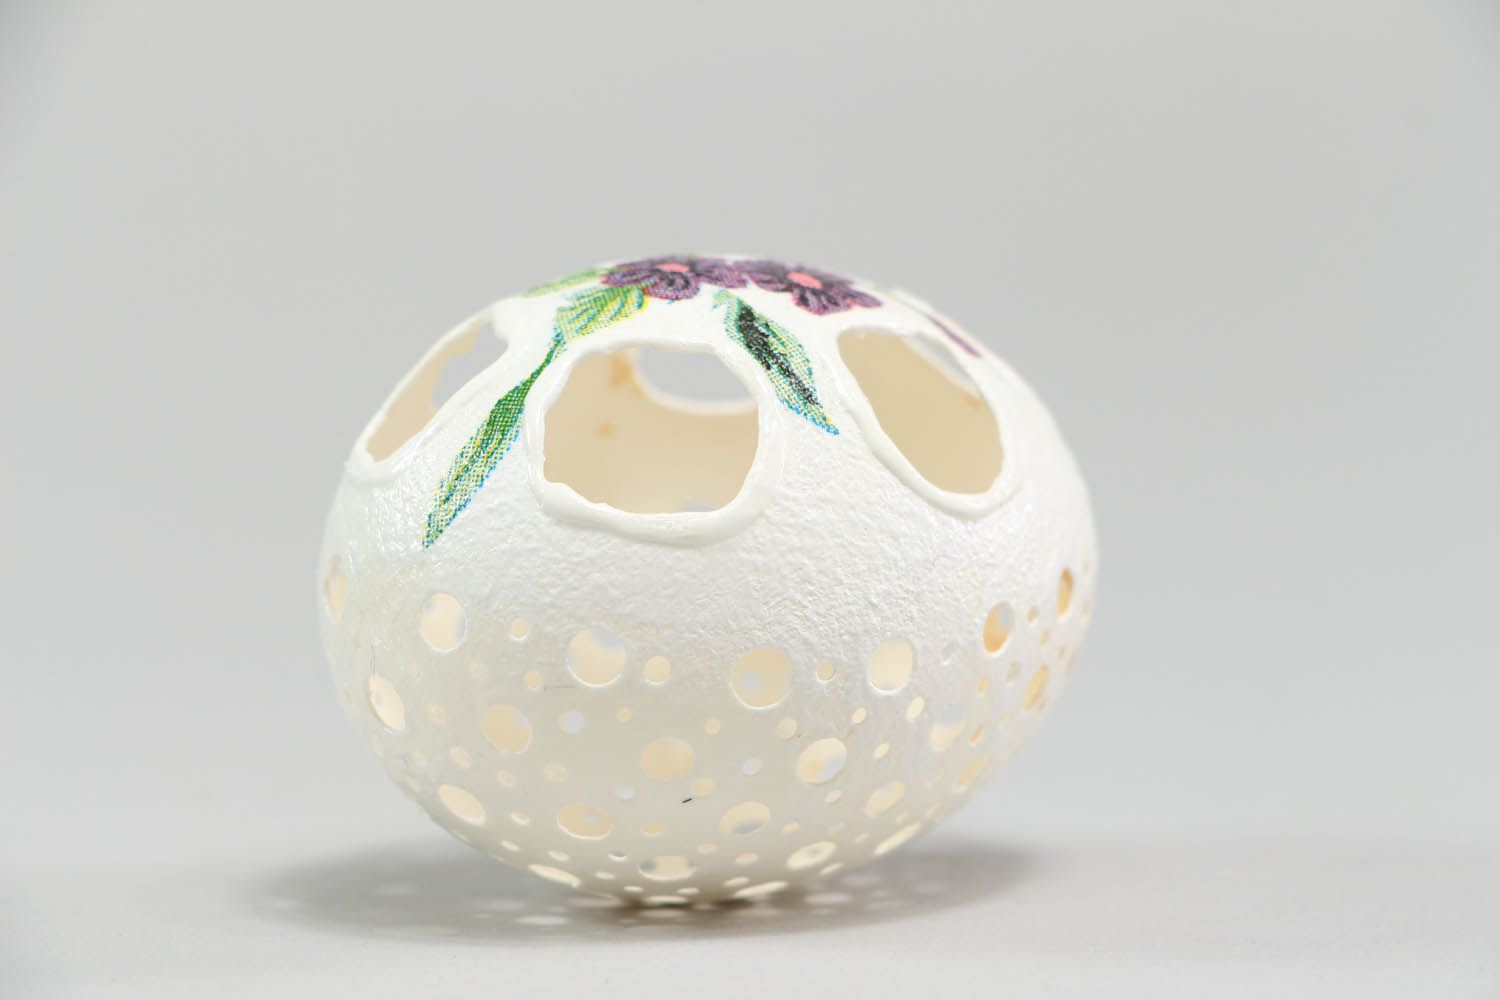 Carved decorative egg photo 3